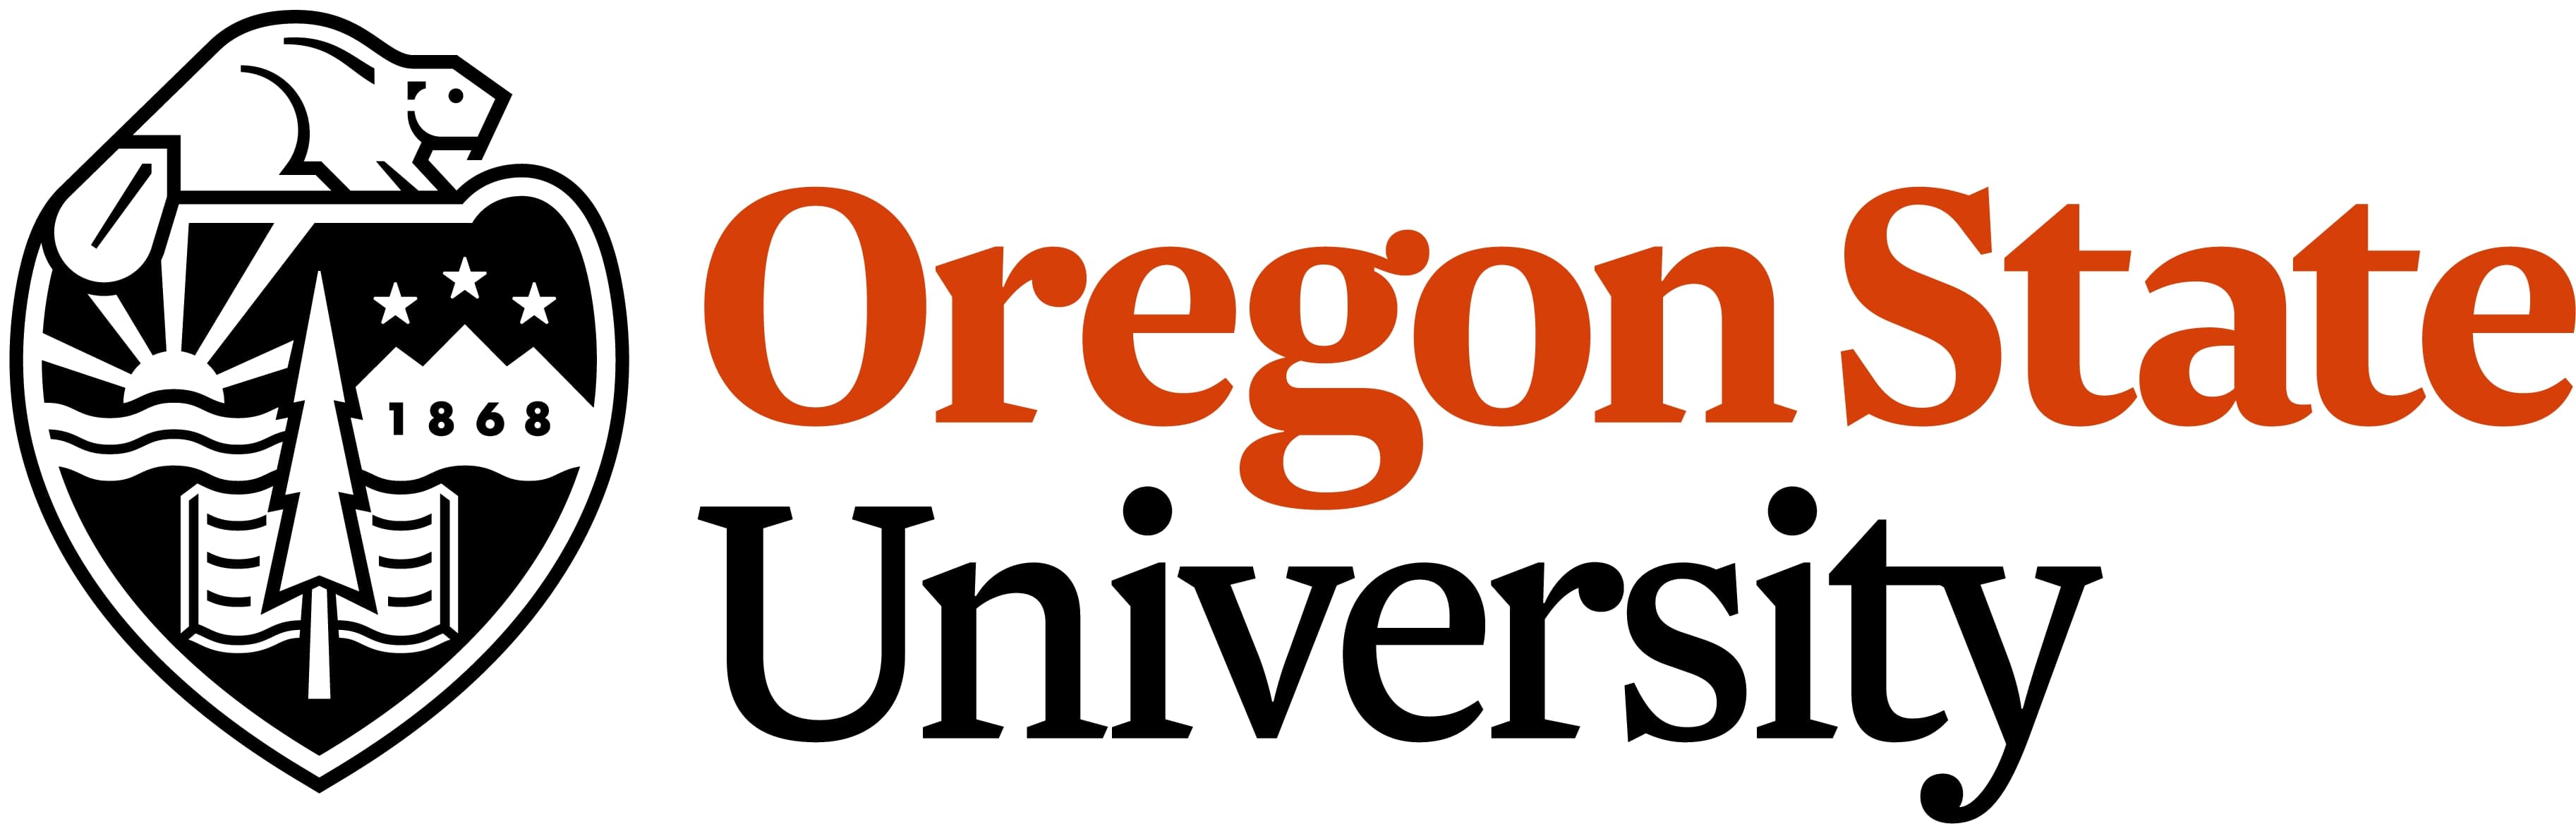 oregon state university undergraduate research